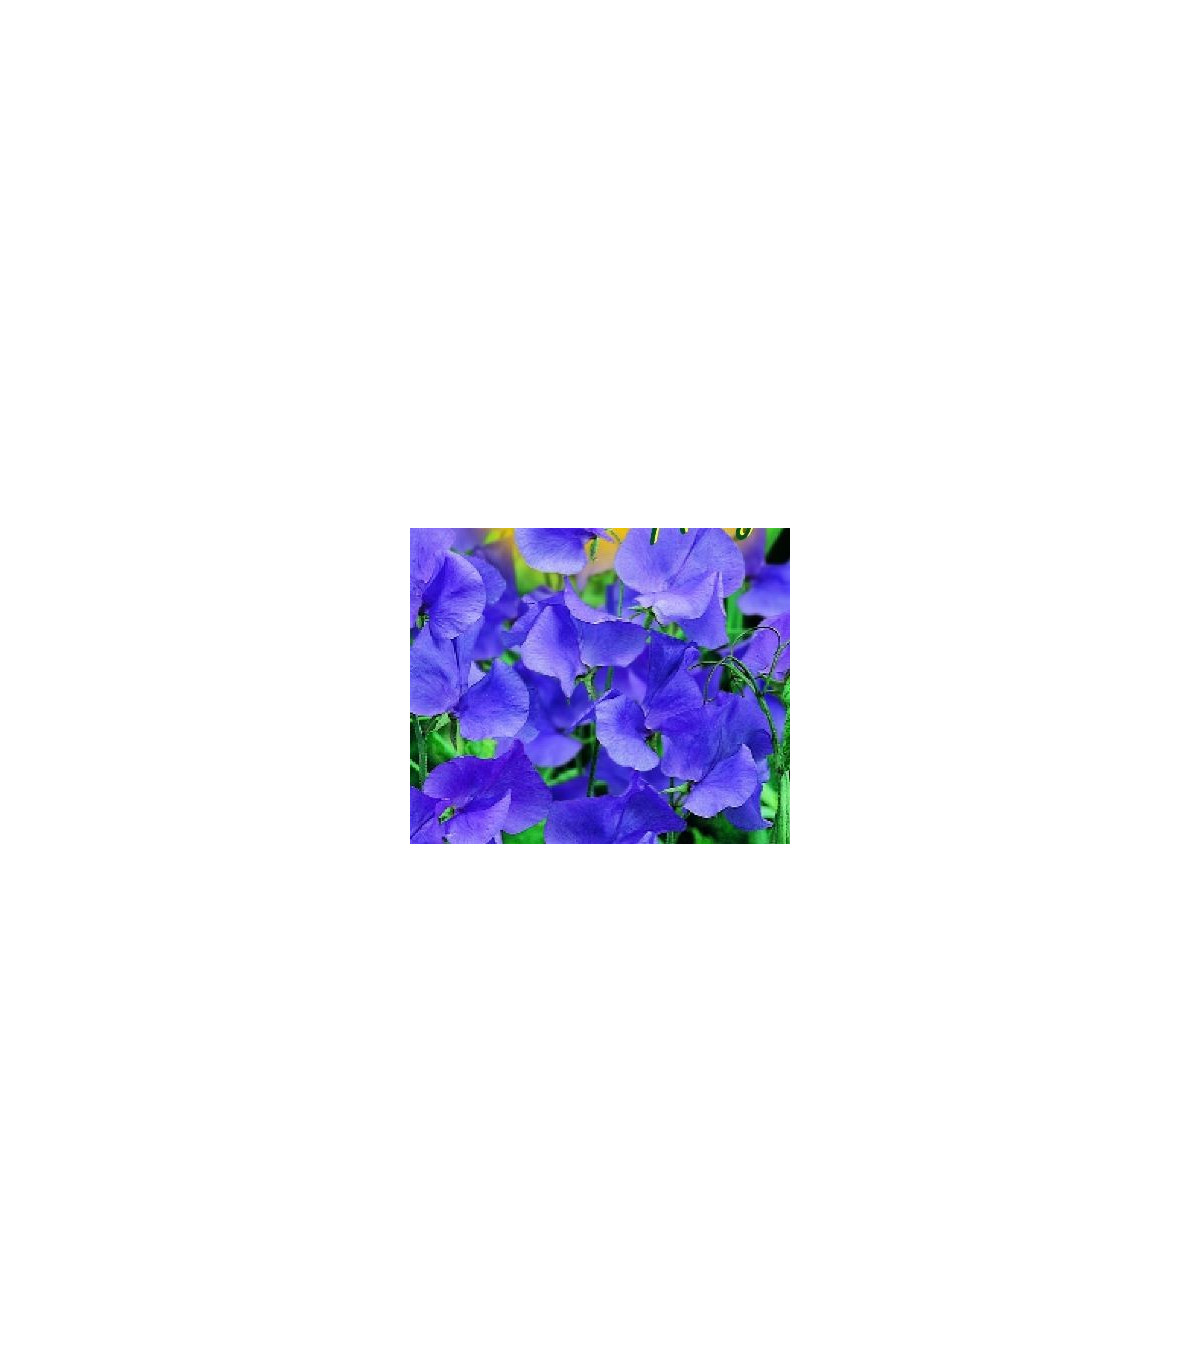 Hrachor pnoucí modrý - Lathyrus odoratus - osivo hrachoru - 20 ks